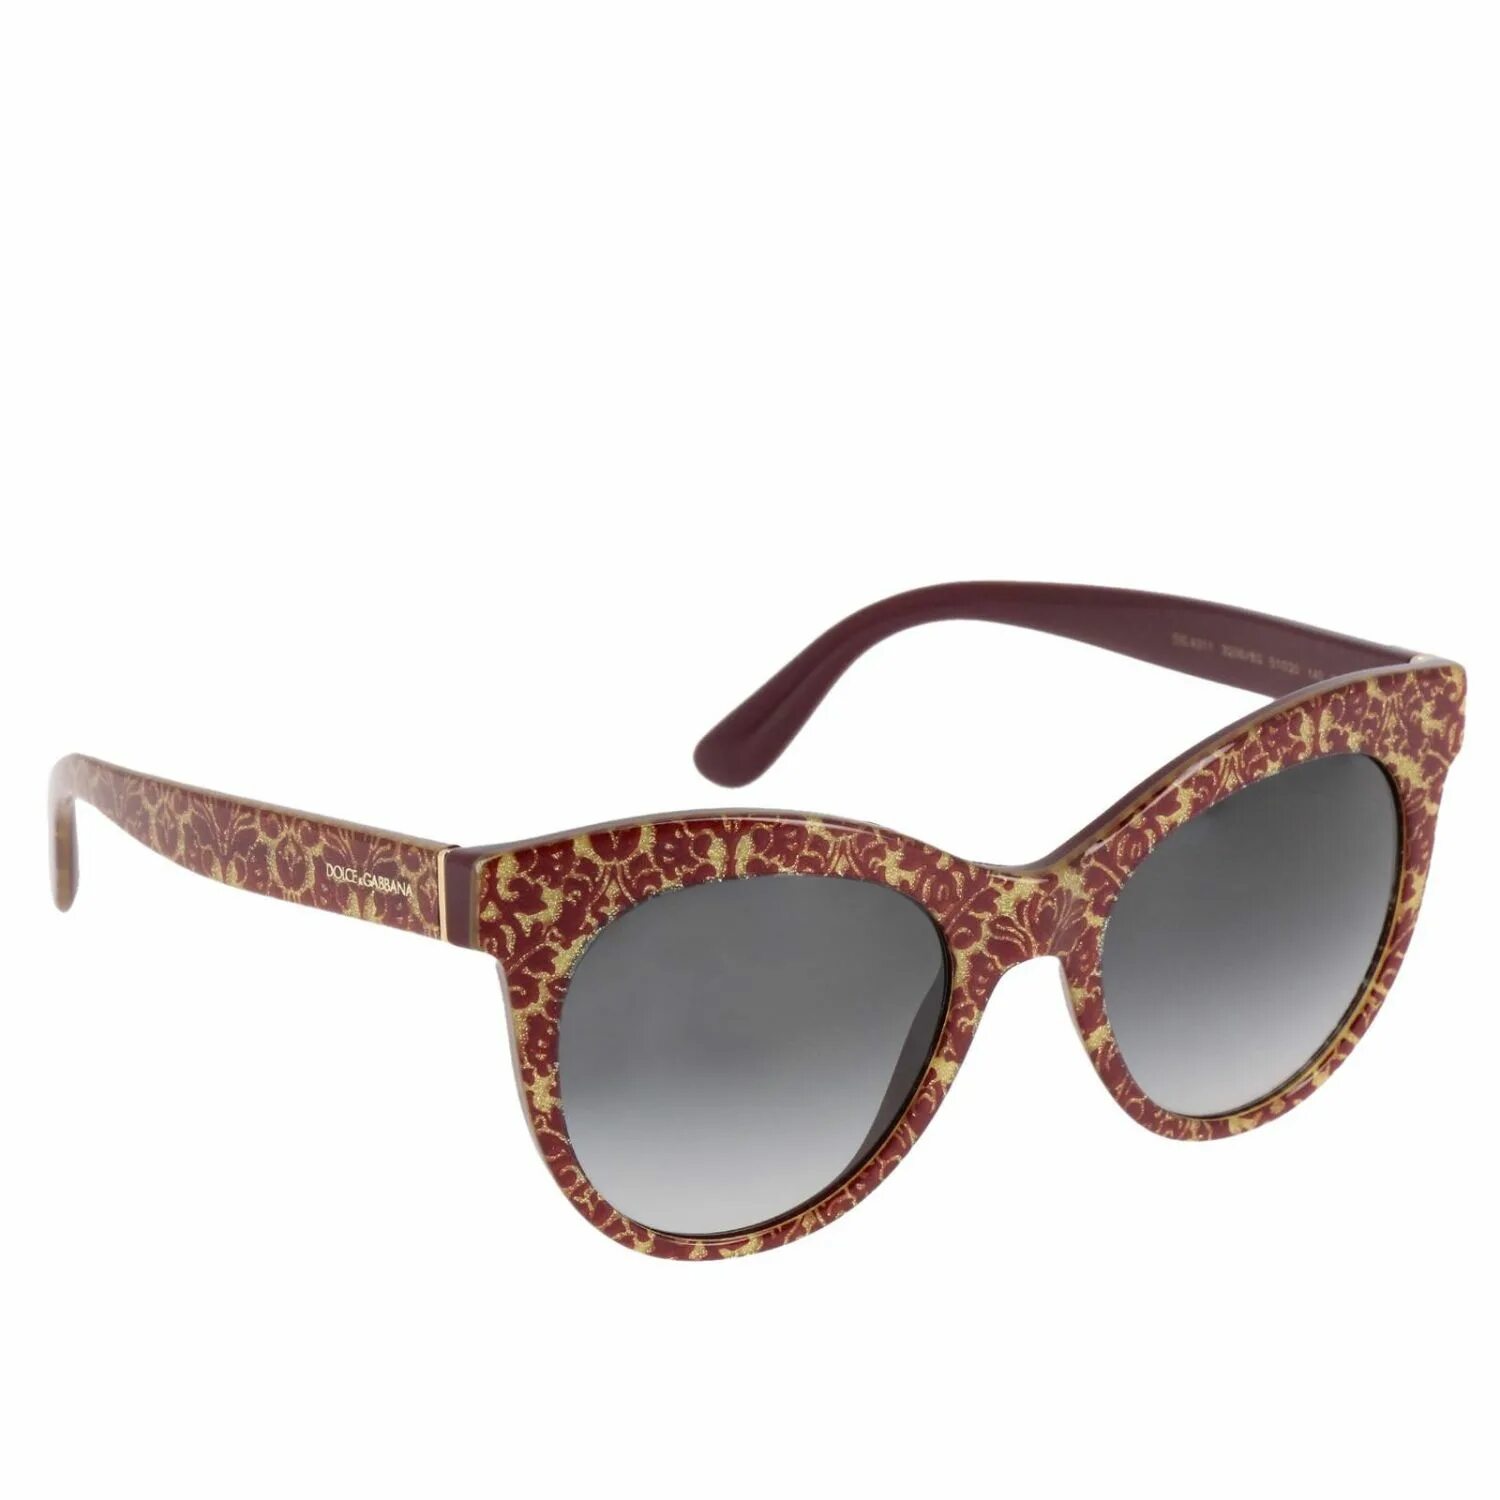 Dolce and Gabbana Black DG 4005 очки. Dolce & Gabbana DG 4377 501/8g. Очки Dolce Gabbana d847. Dolce&Gabbana dg4370 501/8g. Купить очки дольче